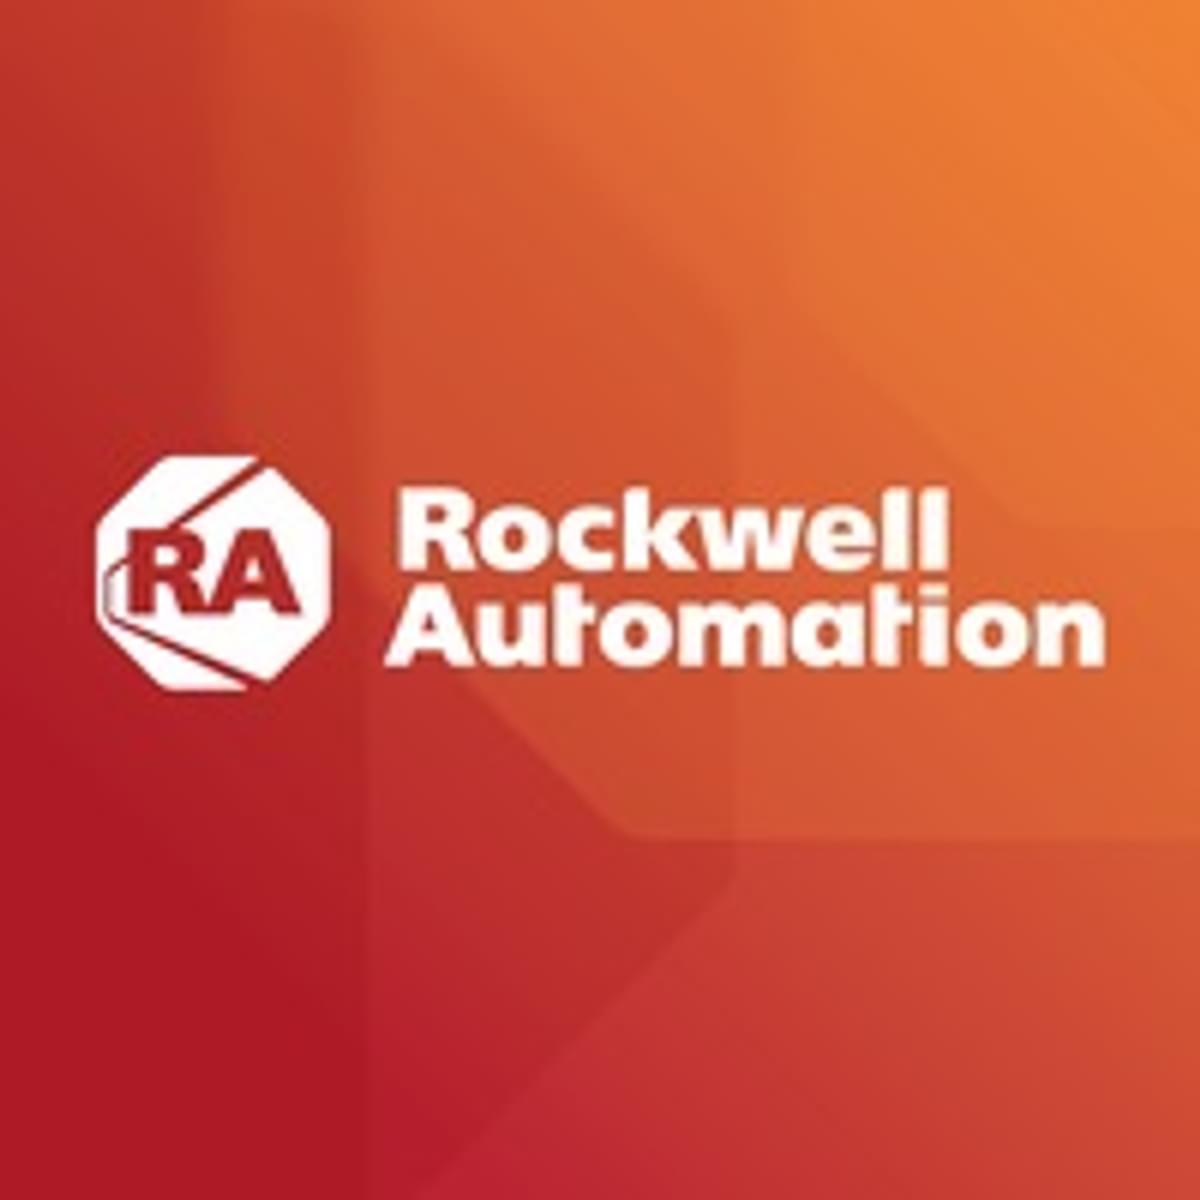 Rockwell Automation koopt Plex Systems image